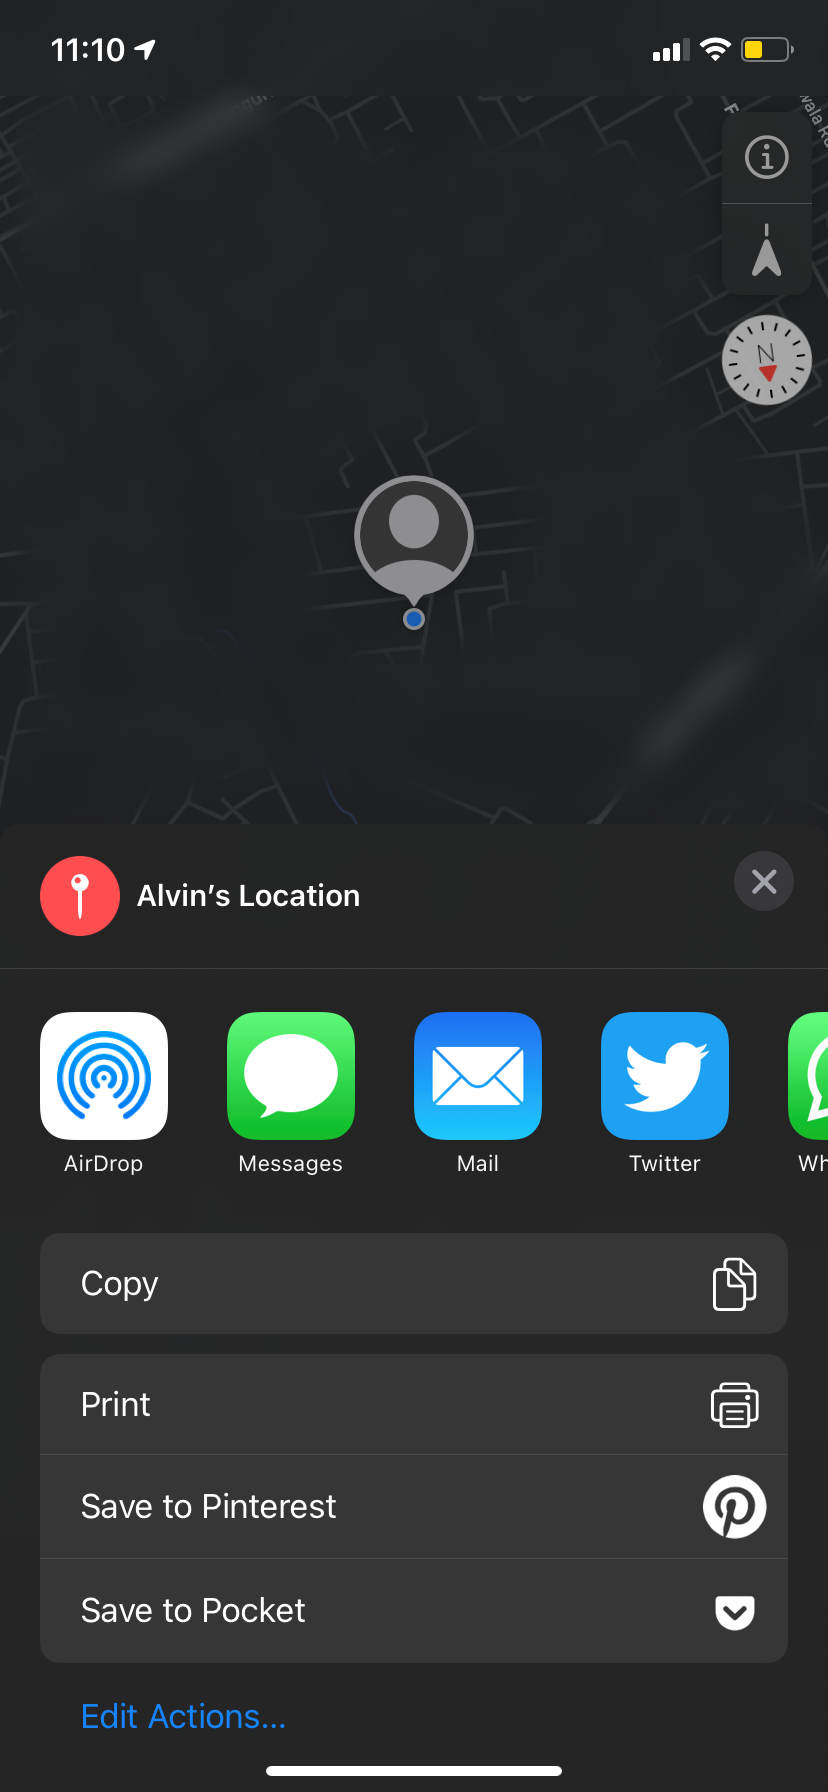 Location sharing menu in Apple Maps